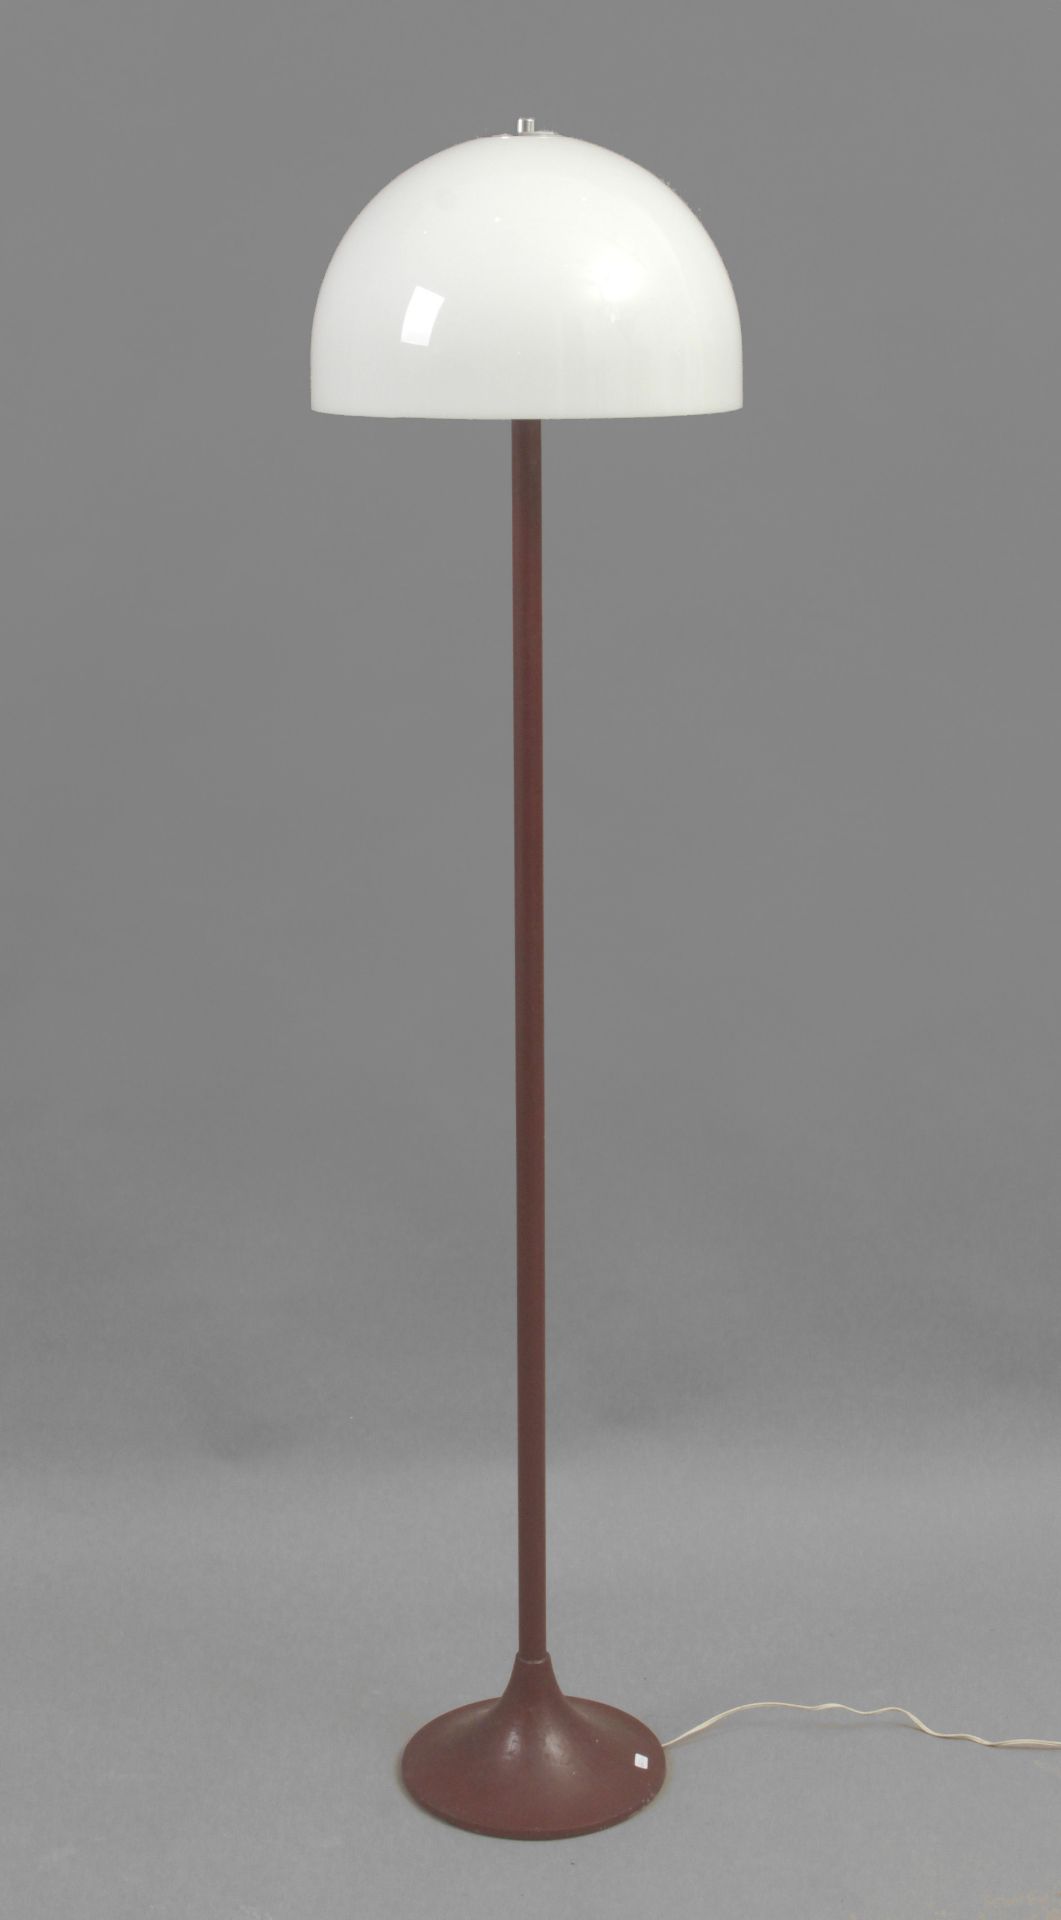 Joan Antoni Blanc for Tramo. A floor lamp circa 1960-1969